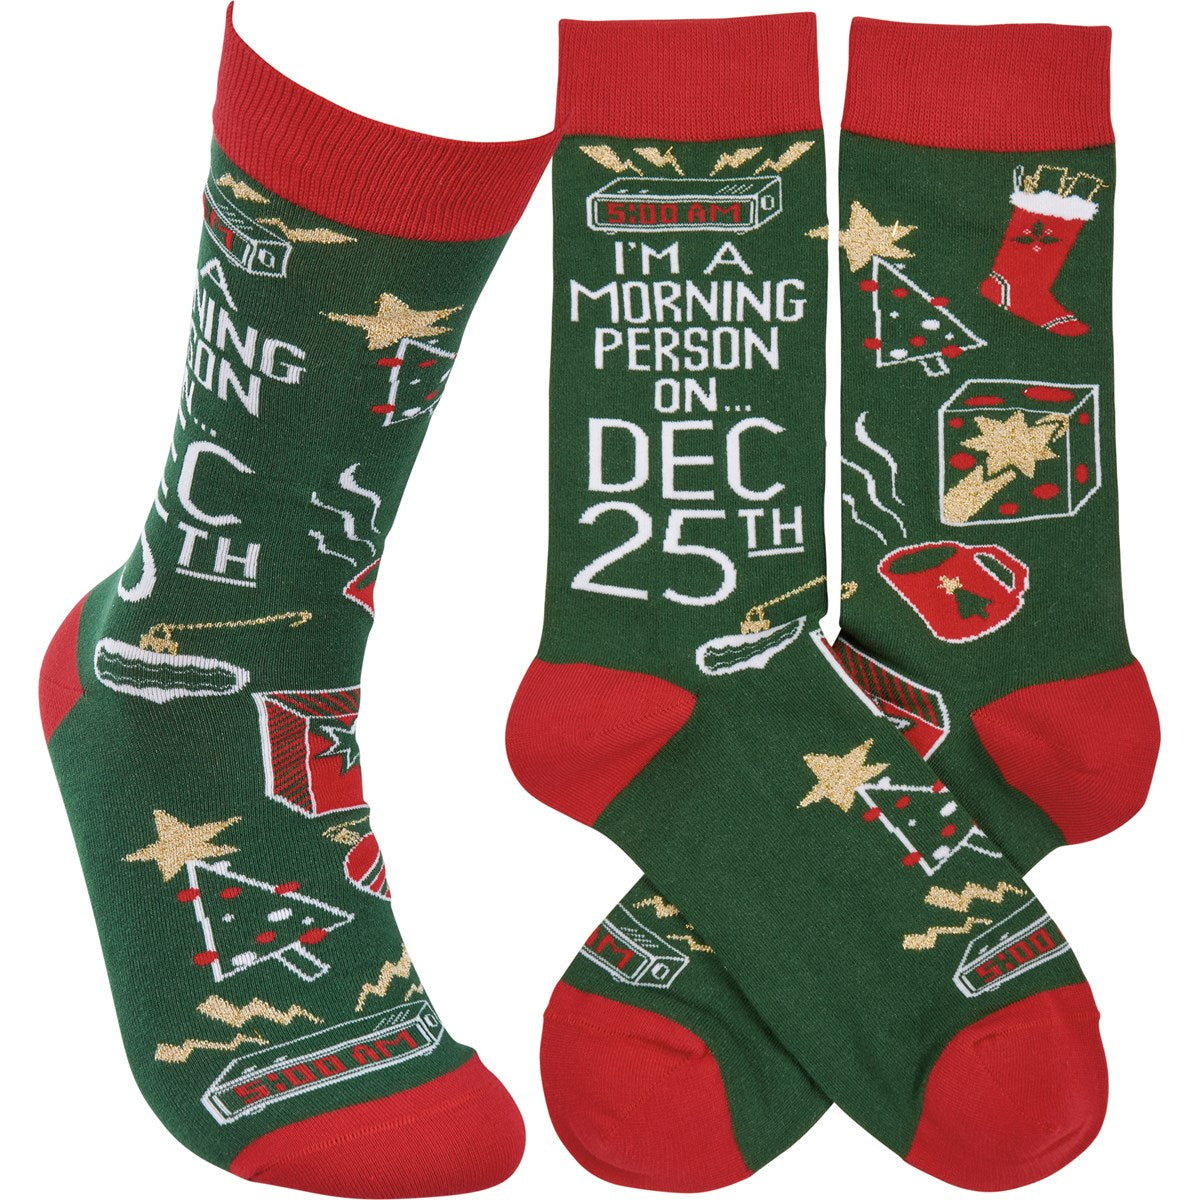 Morning Person On Dec 25th Socks-Apparel > Apparel & Accessories > Clothing > Underwear & Socks-Quinn's Mercantile